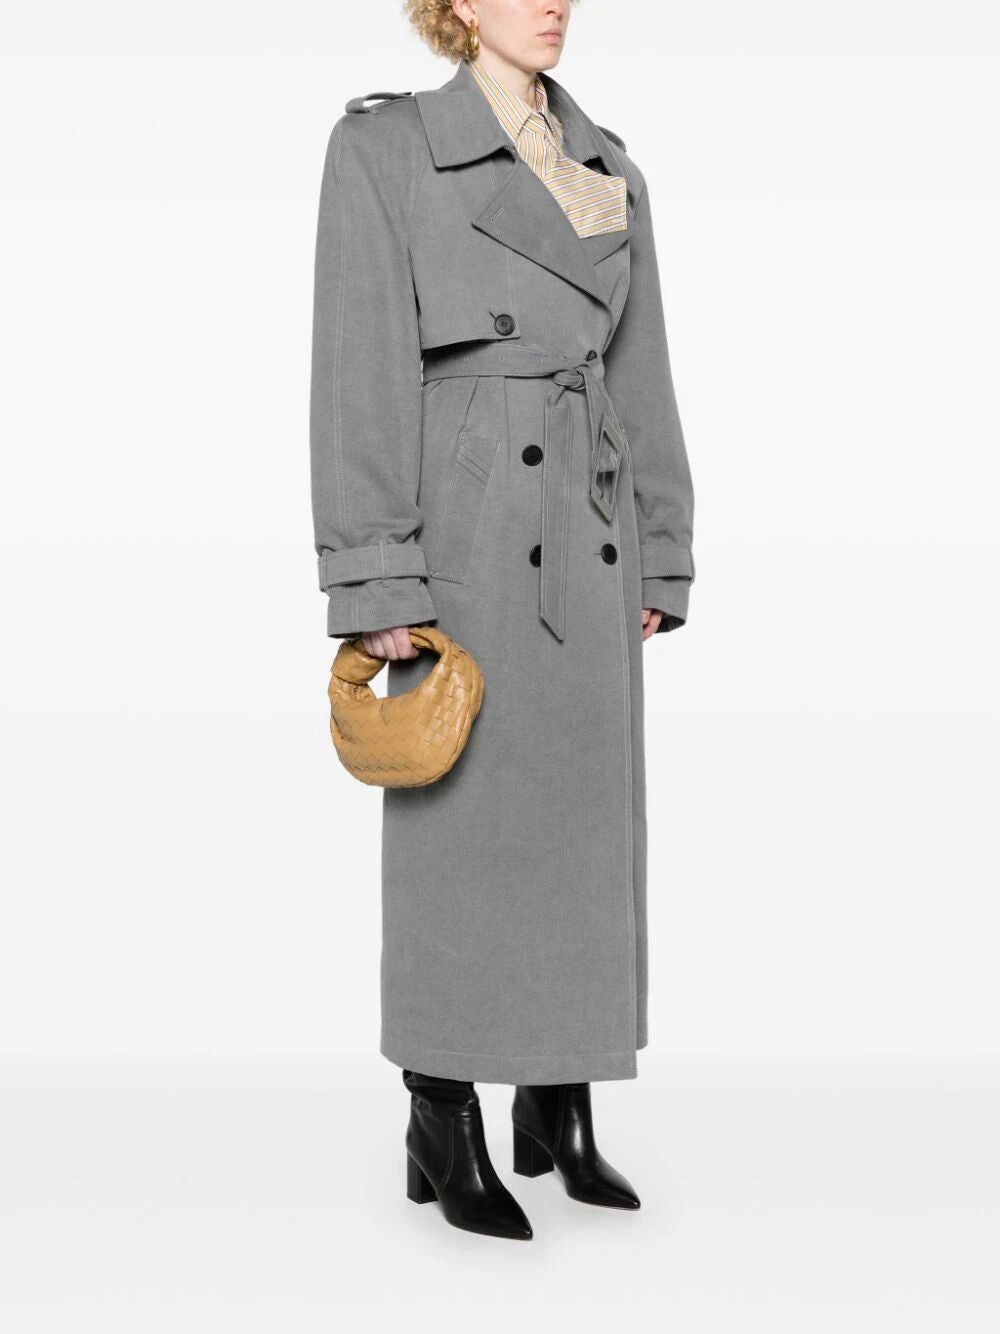 BOTTEGA VENETA Mini Jodie Nappa Leather Handbag in Brown for Women